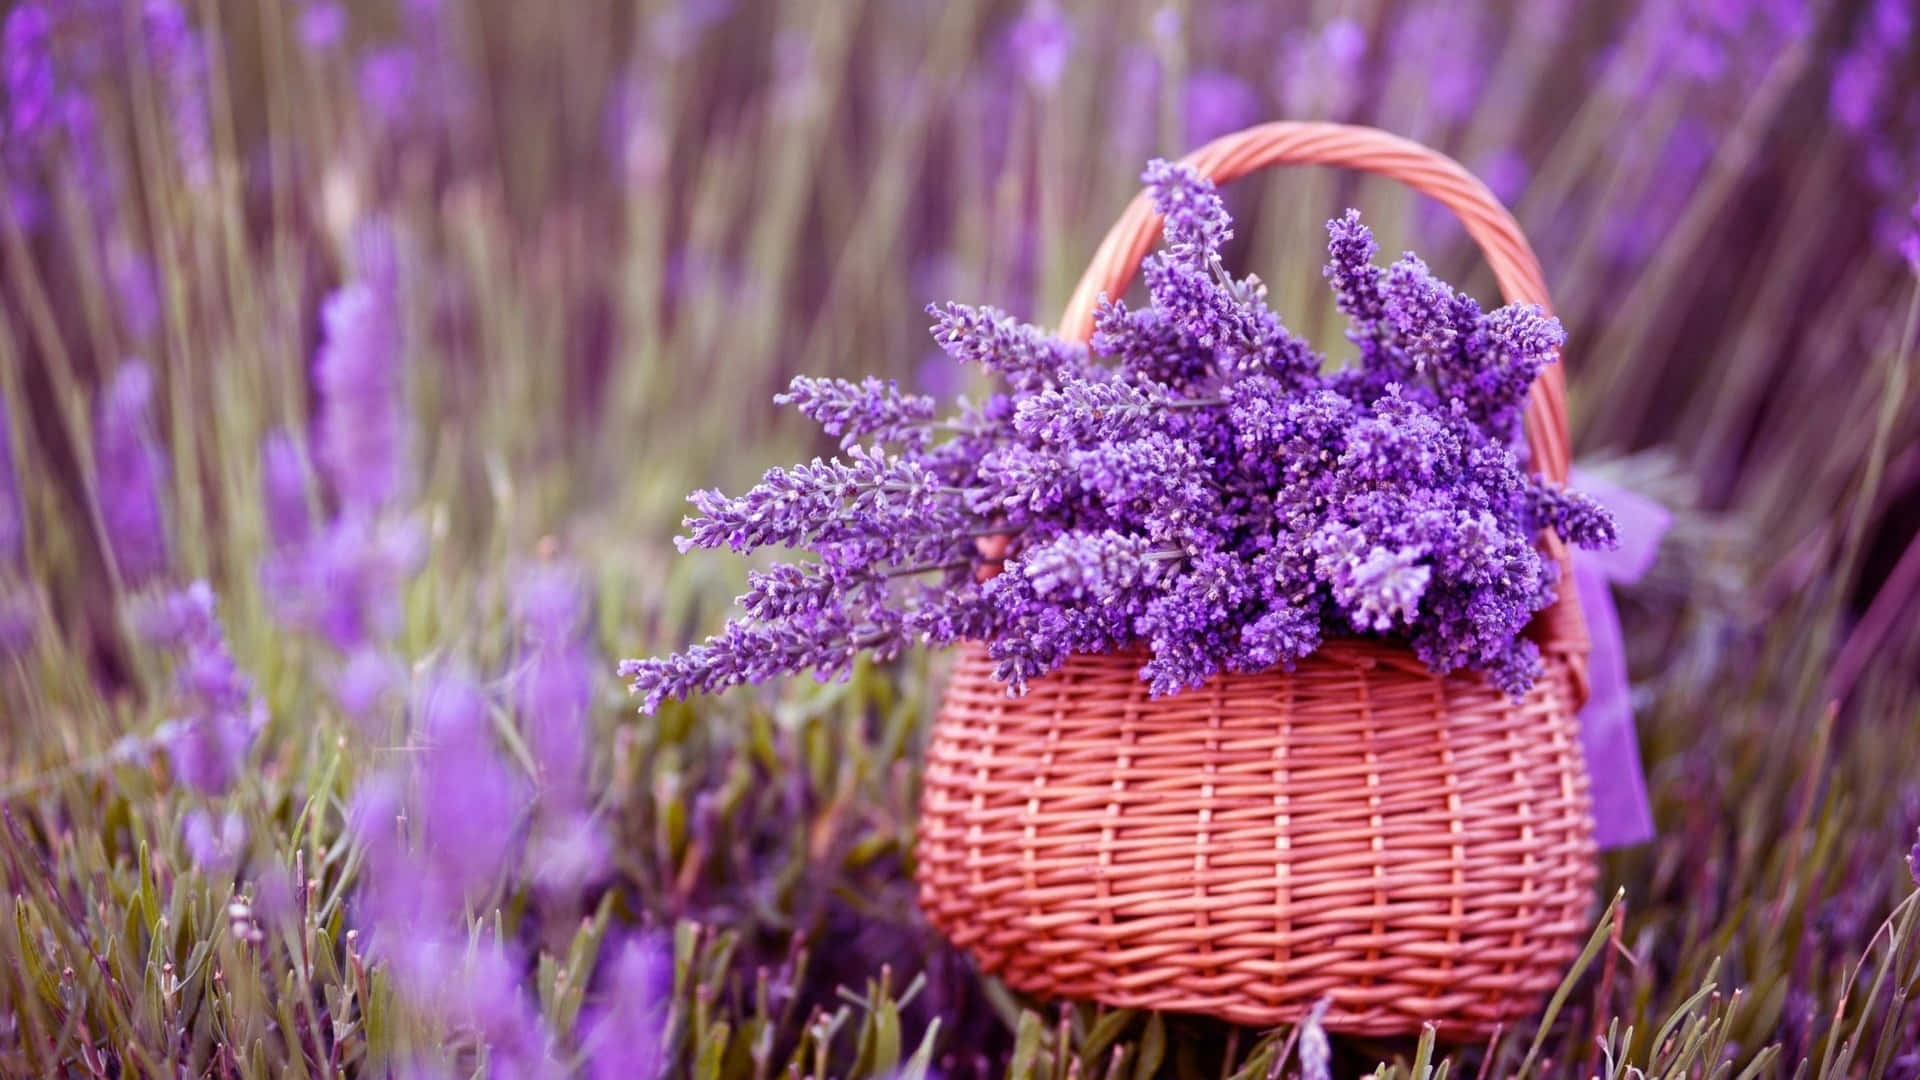 Lavender In Basket Purple Flowers Background